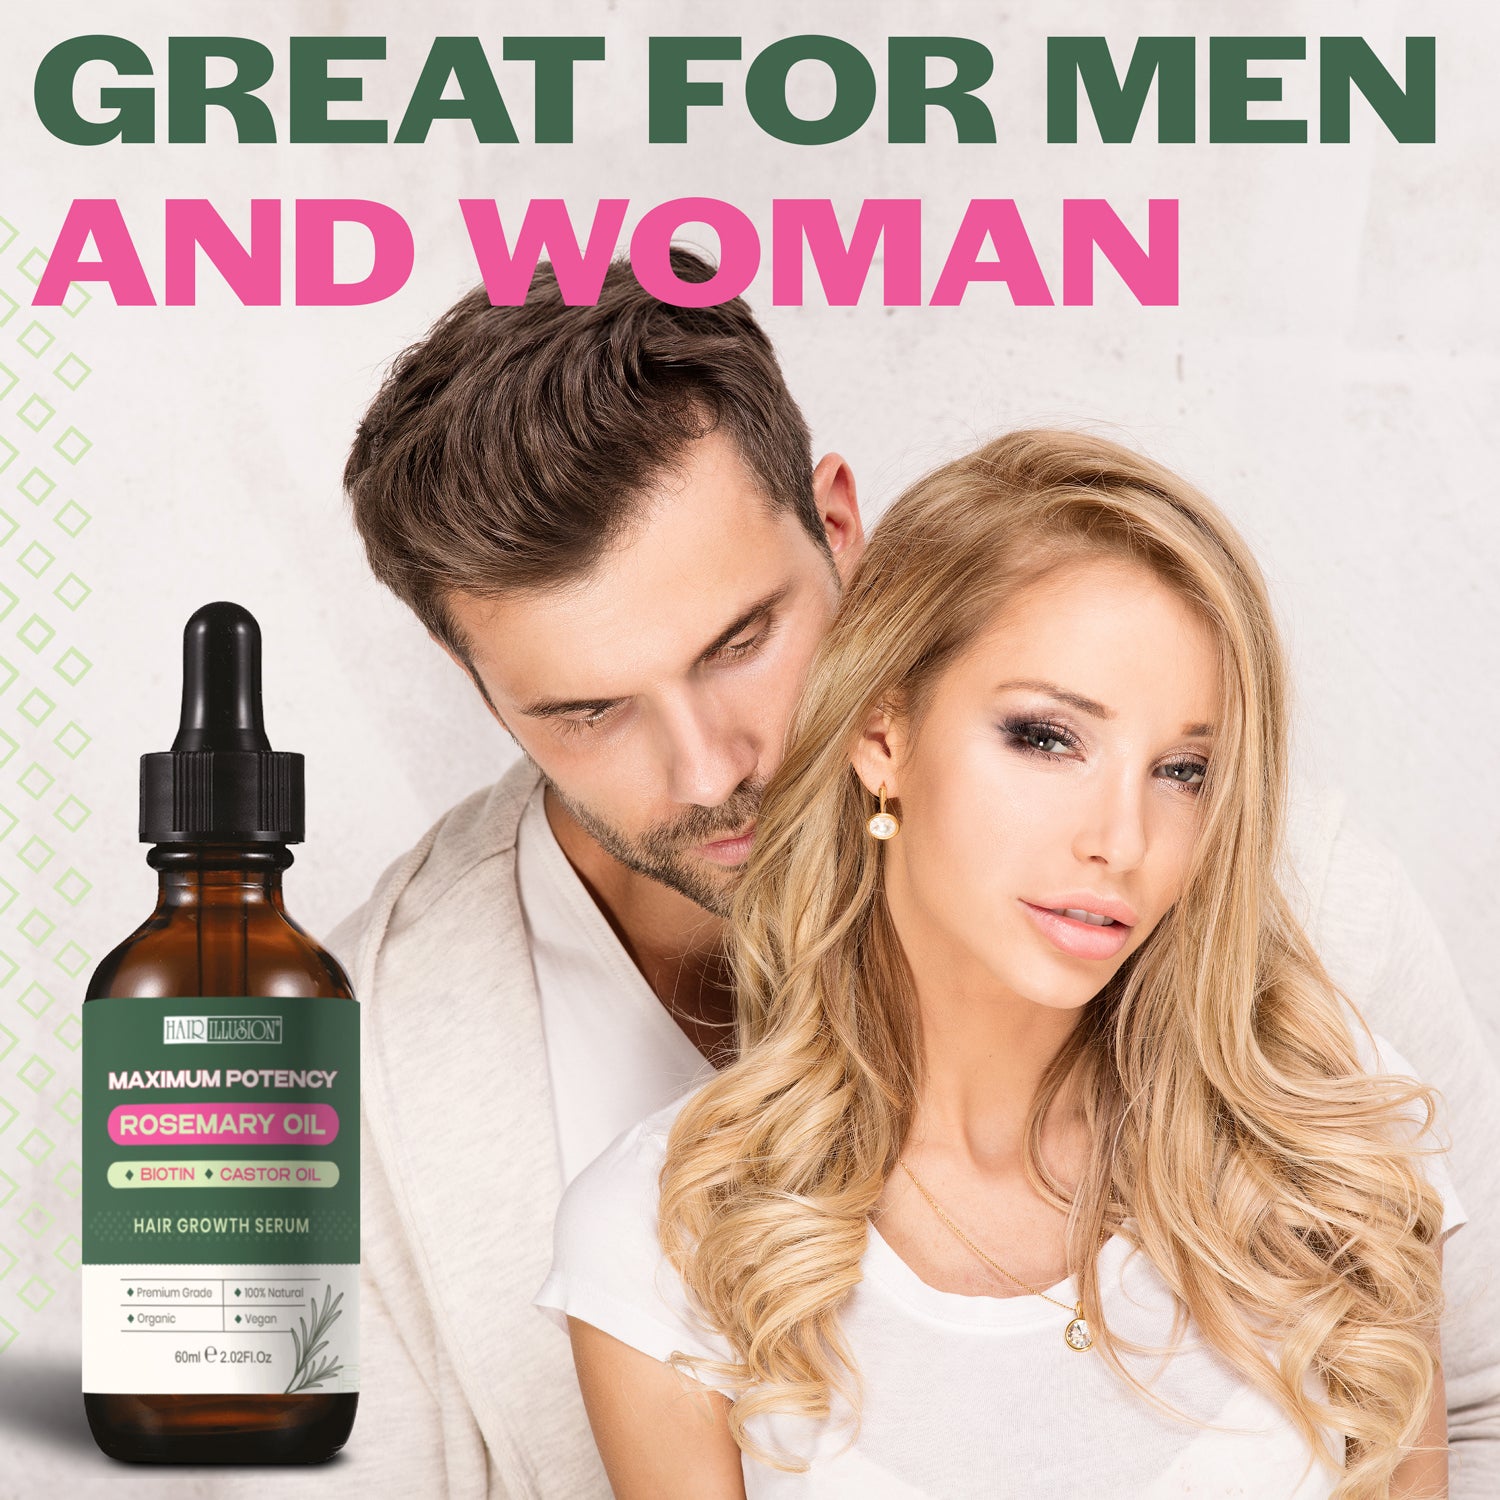 Hair Illusion Hair Growth Serum with maximum potency Rosemary Oil, Biotin & Castor Oil